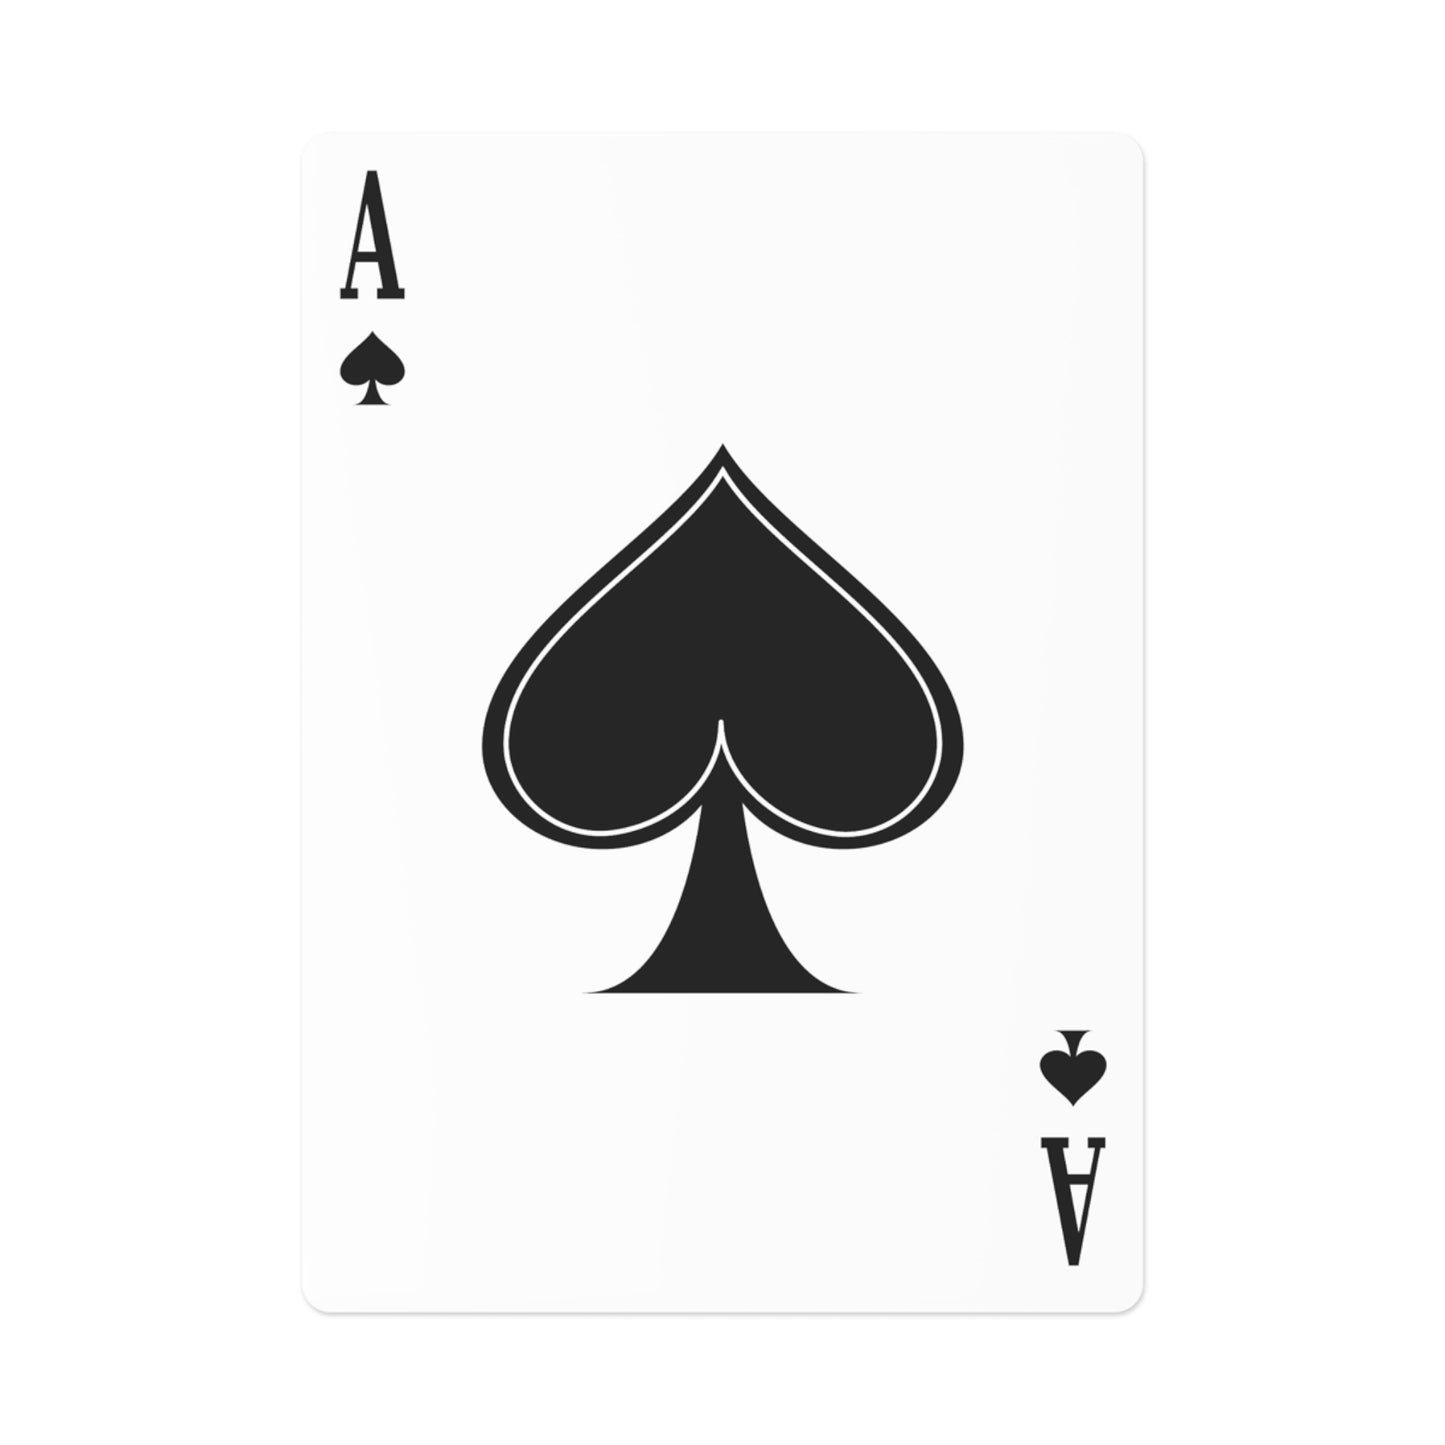 Poker Cards: Baseball Pink